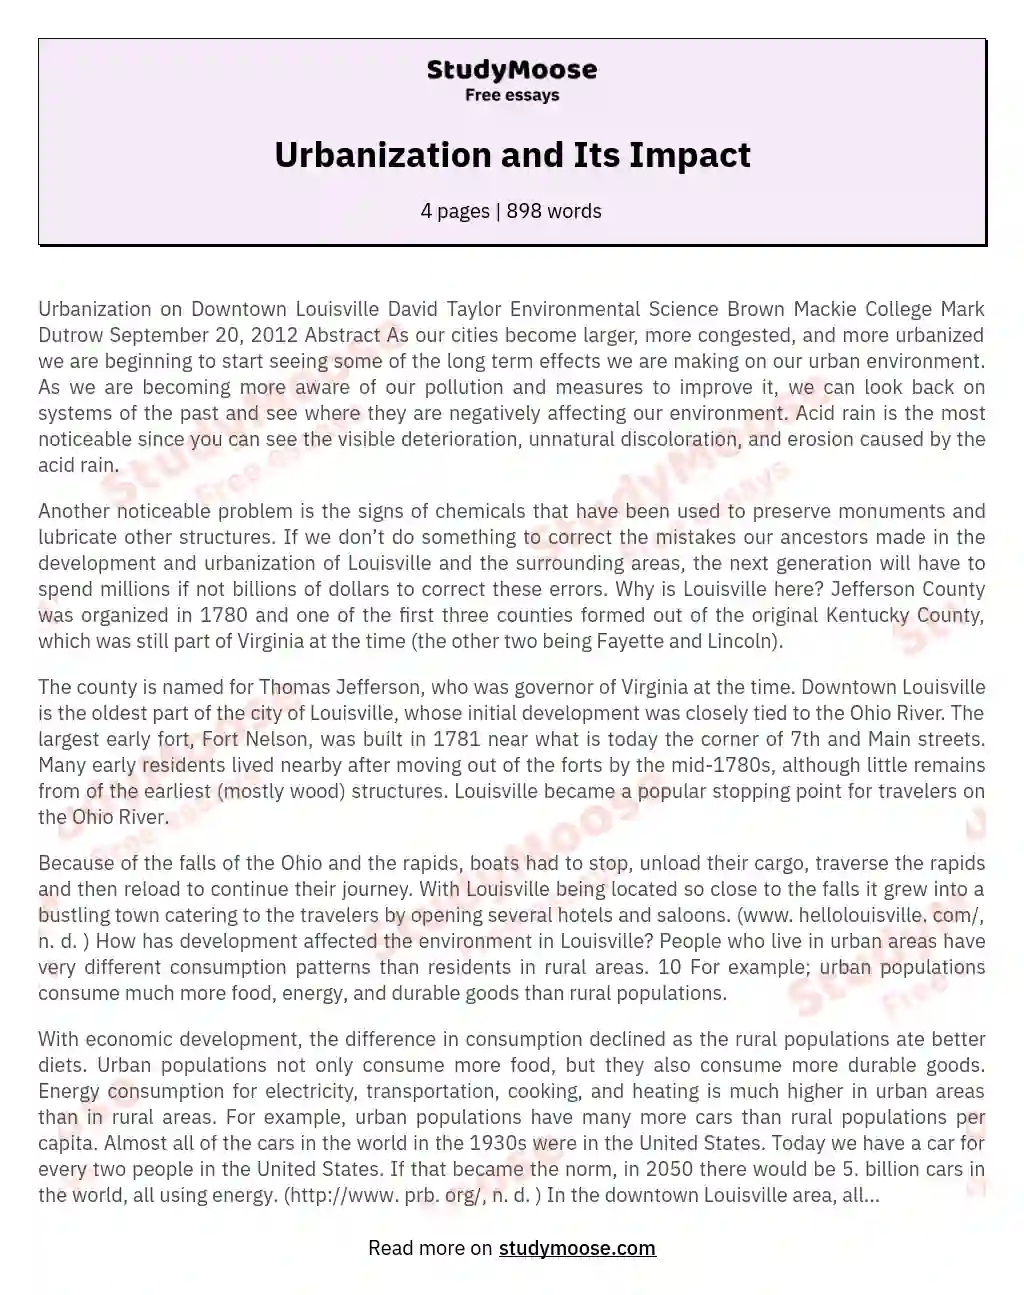 Urbanization and Its Impact essay